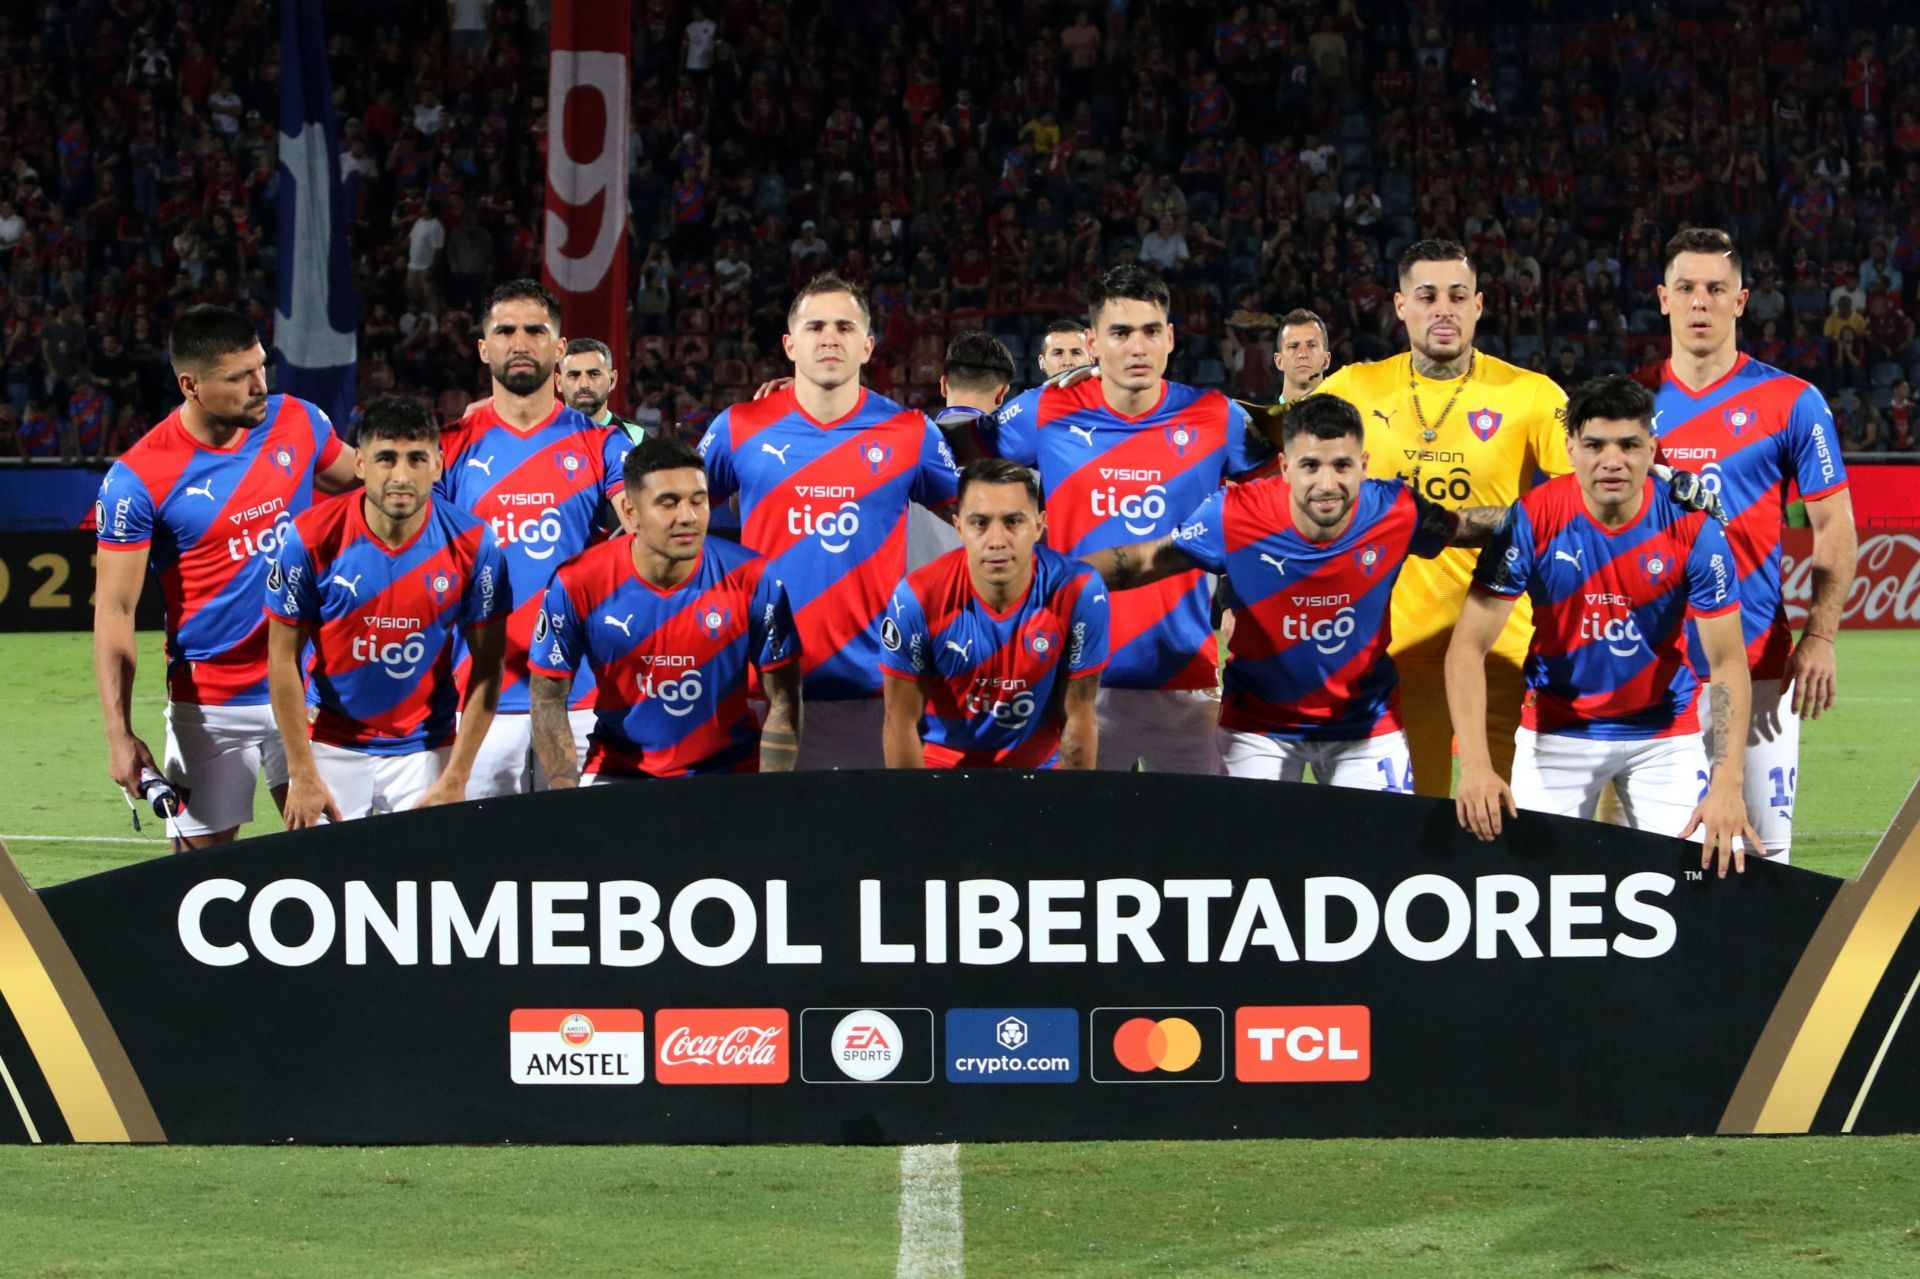 Cerro Porteno face Alianza Lima on Wednesday 